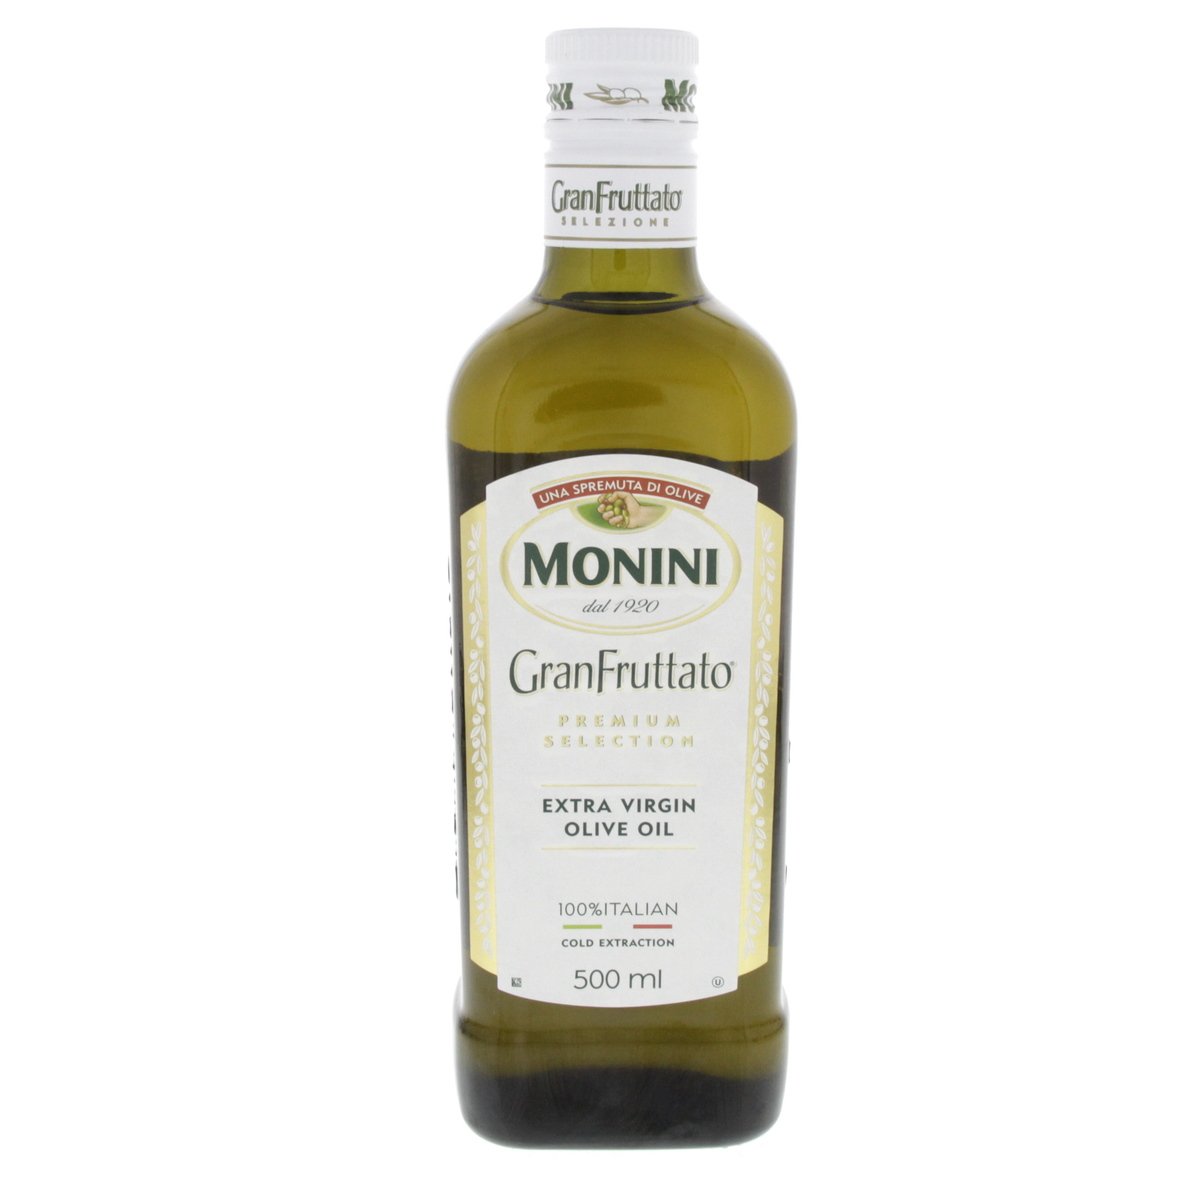 Monini Gran Fruttato Extra Virgin Olive Oil 500 ml